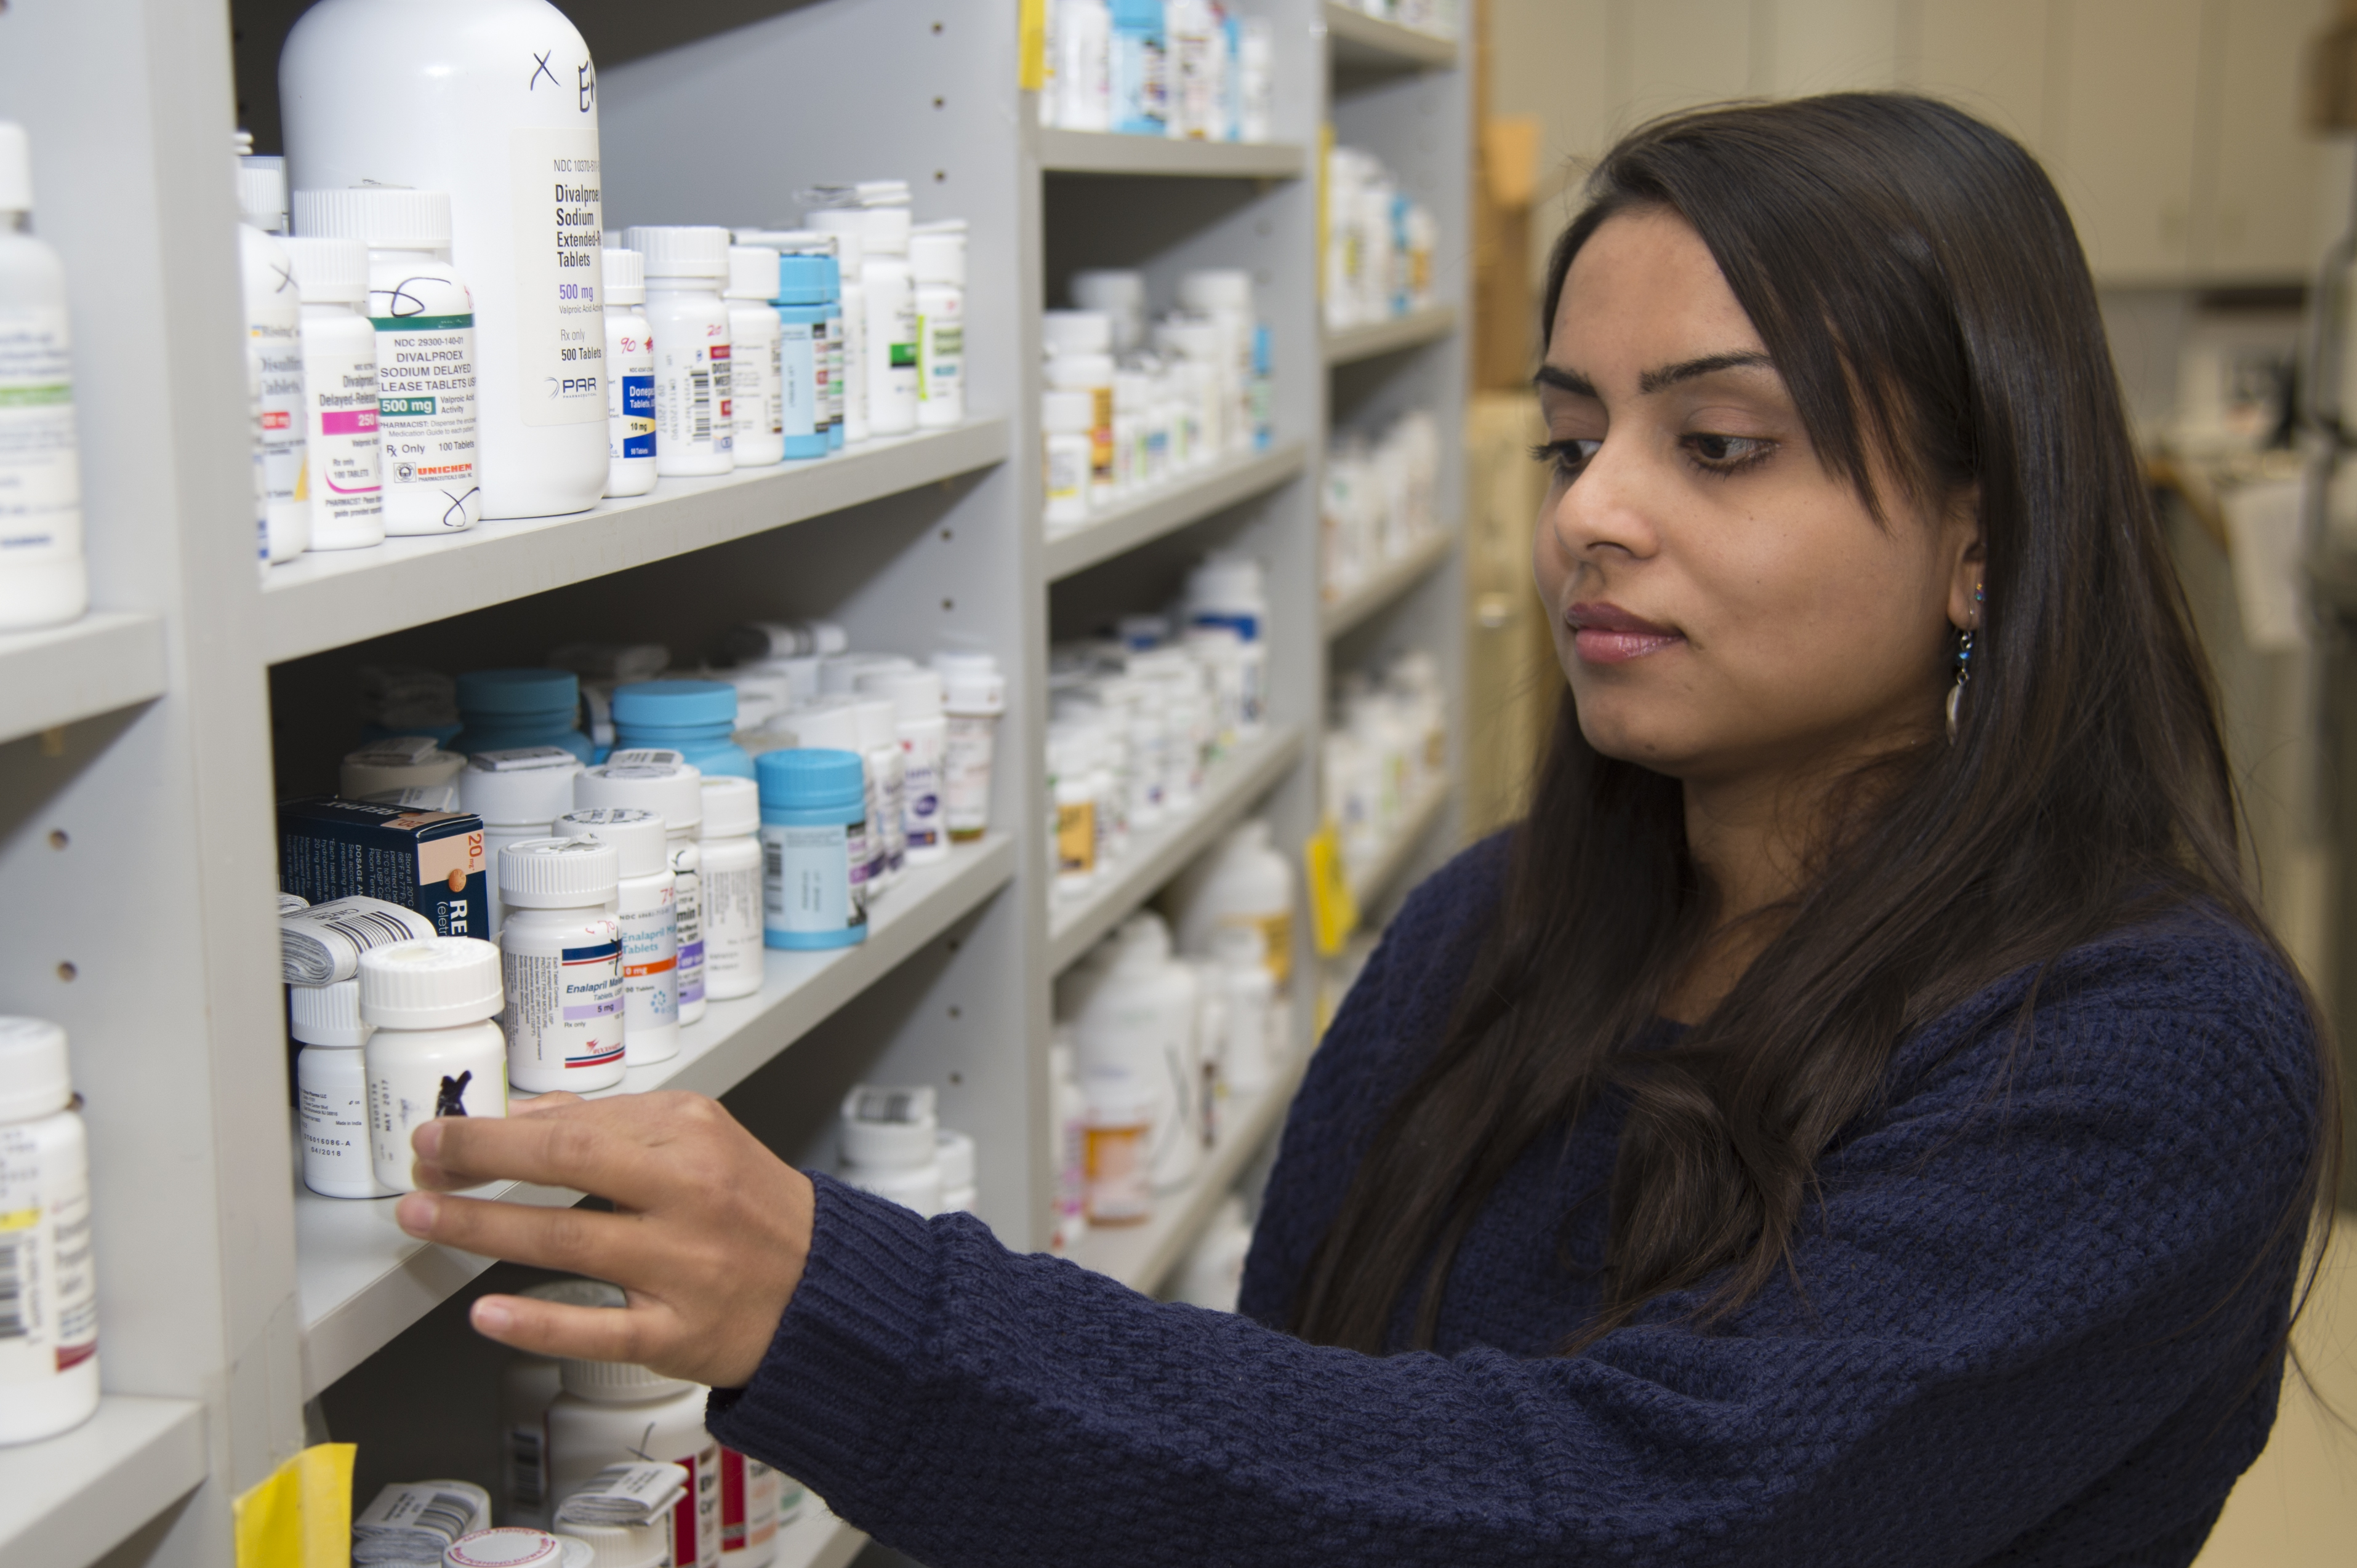 Female pharmacists places prescription bottle on shelf